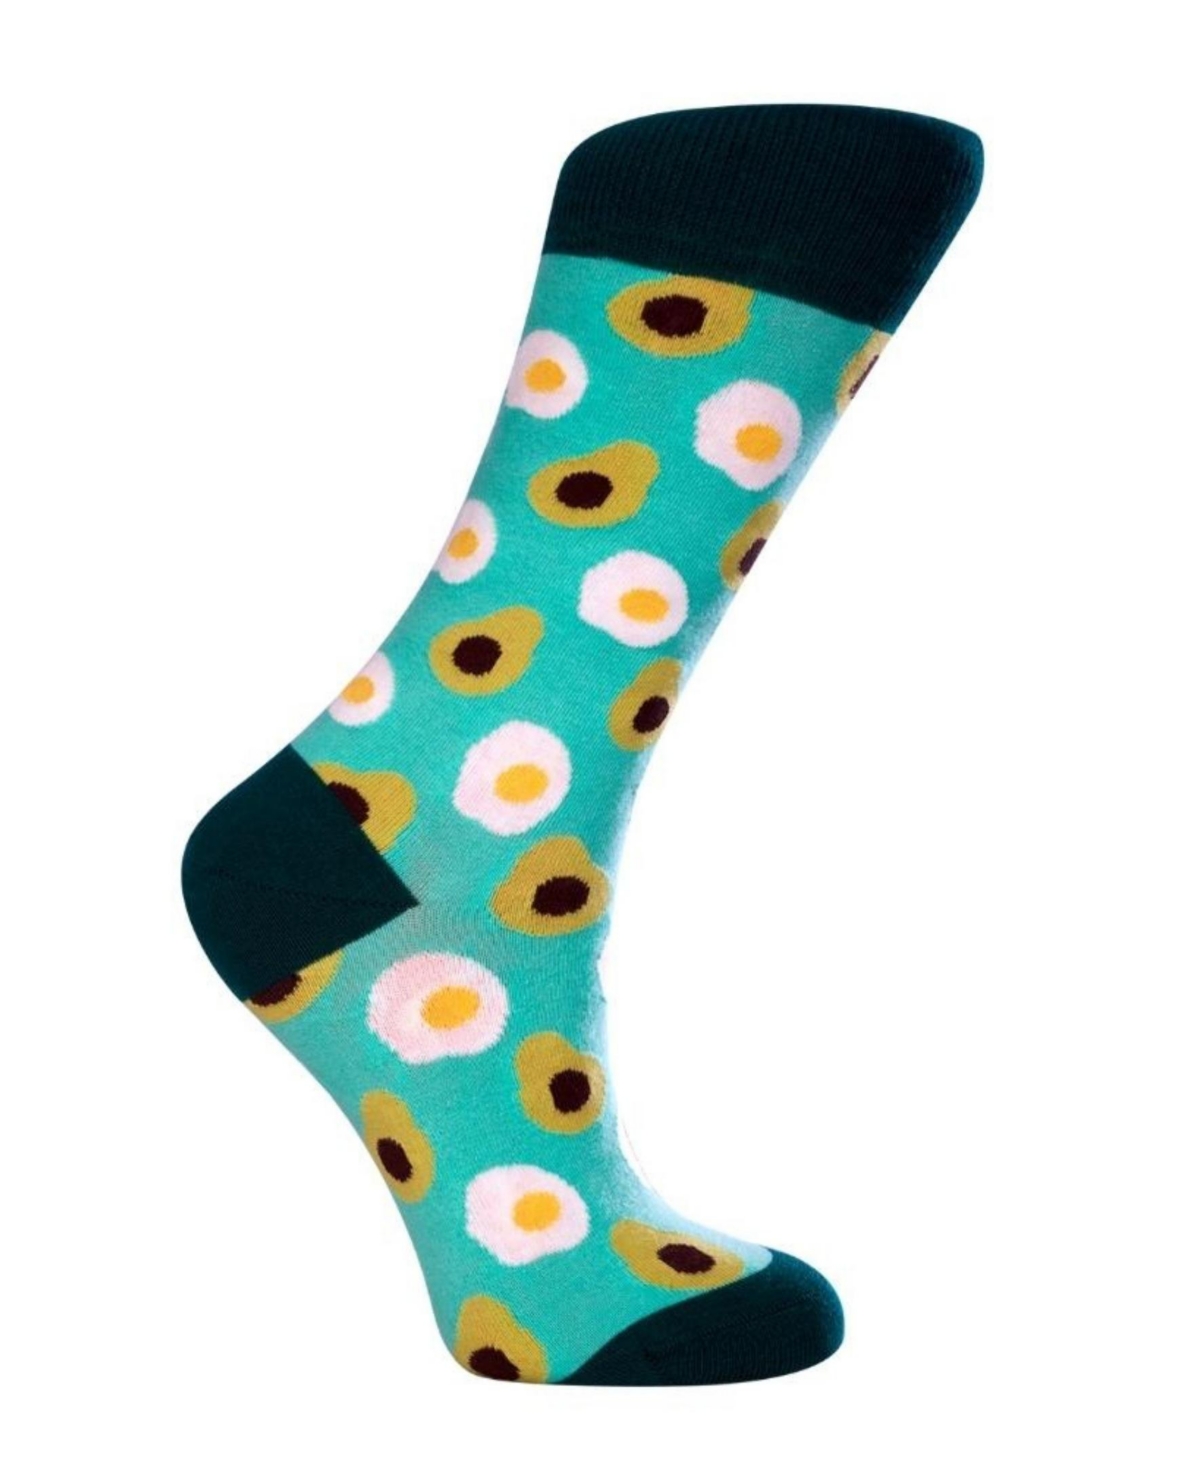 Love Sock Company Women's Avocado W-Cotton Novelty Crew Socks with Seamless Toe Design, Pack of 1